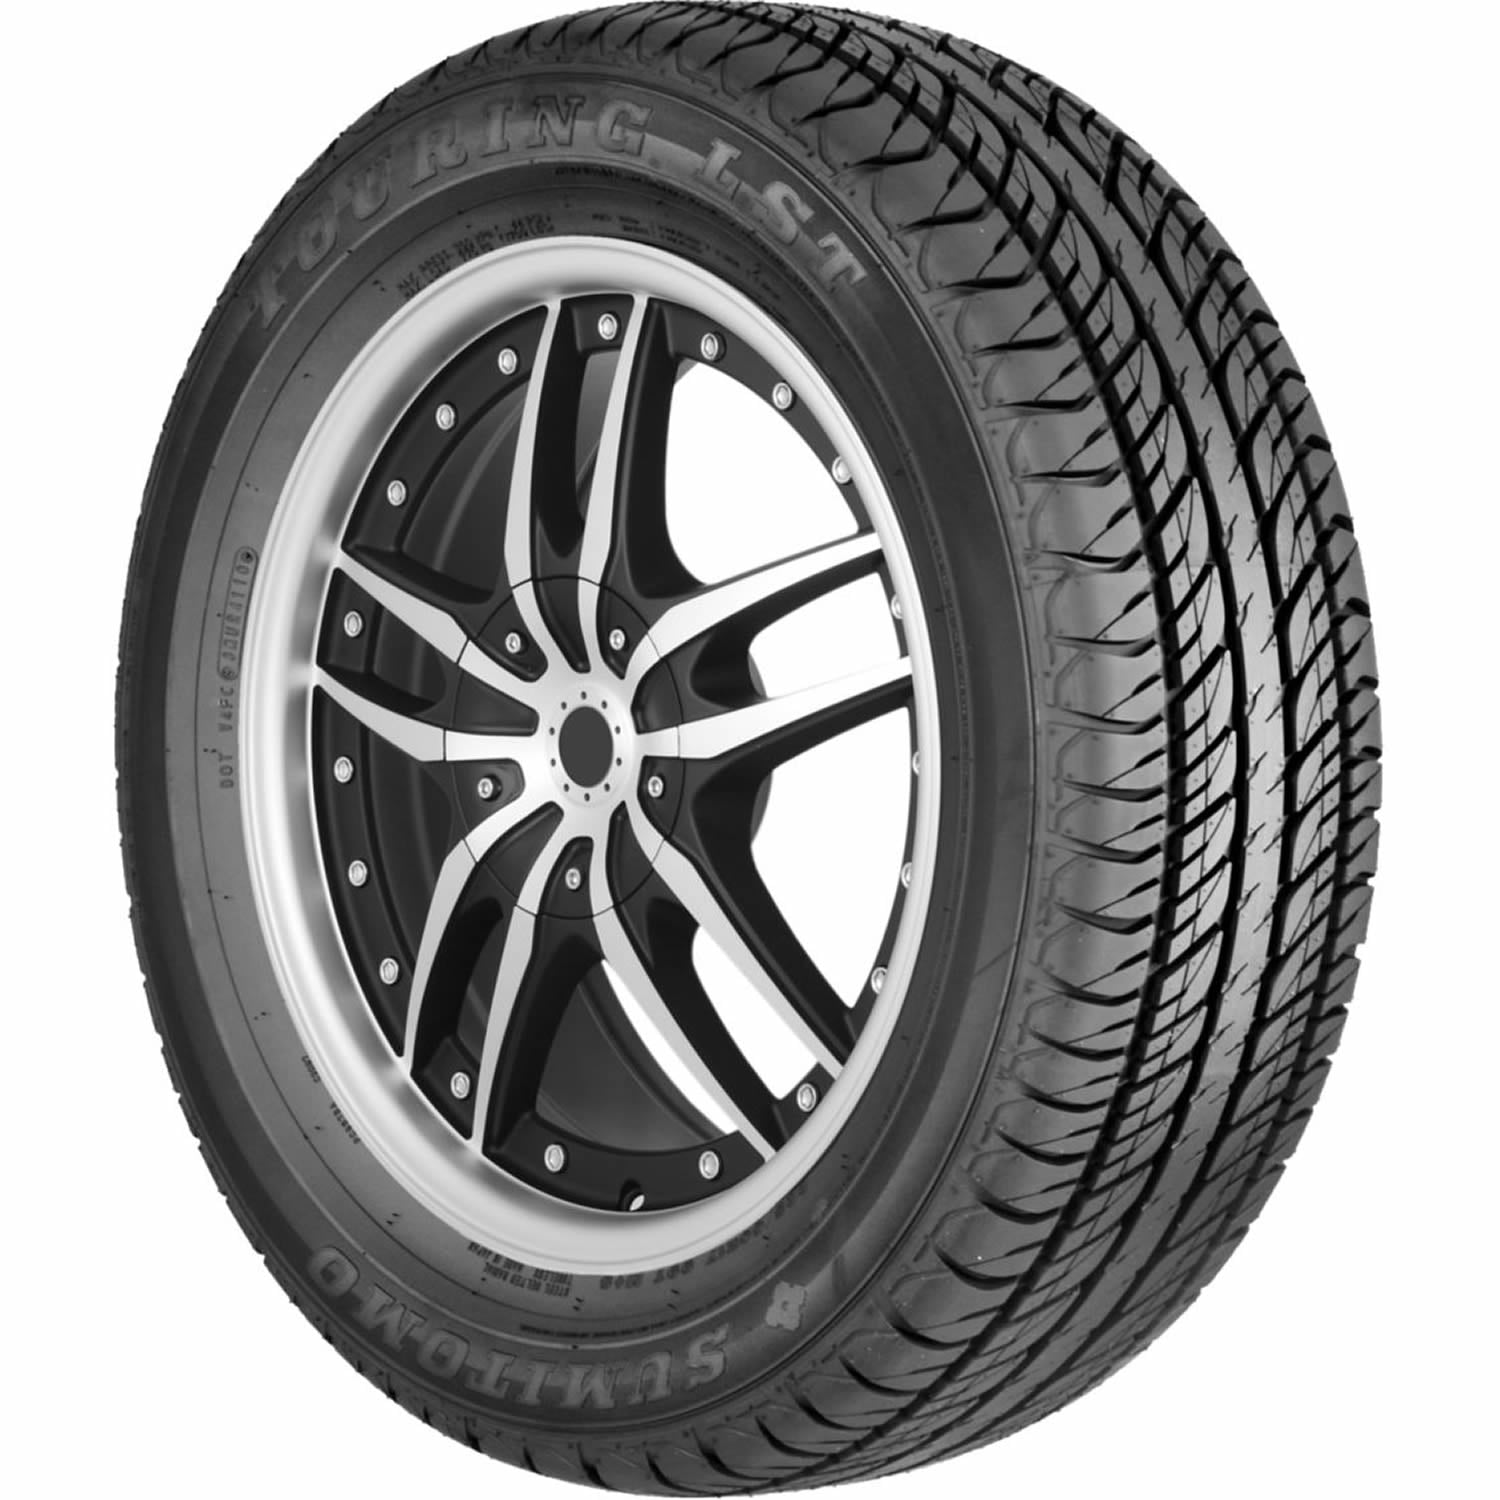 SUMITOMO TOURING LS 205/60R15 (24.6X7.9R 15) Tires